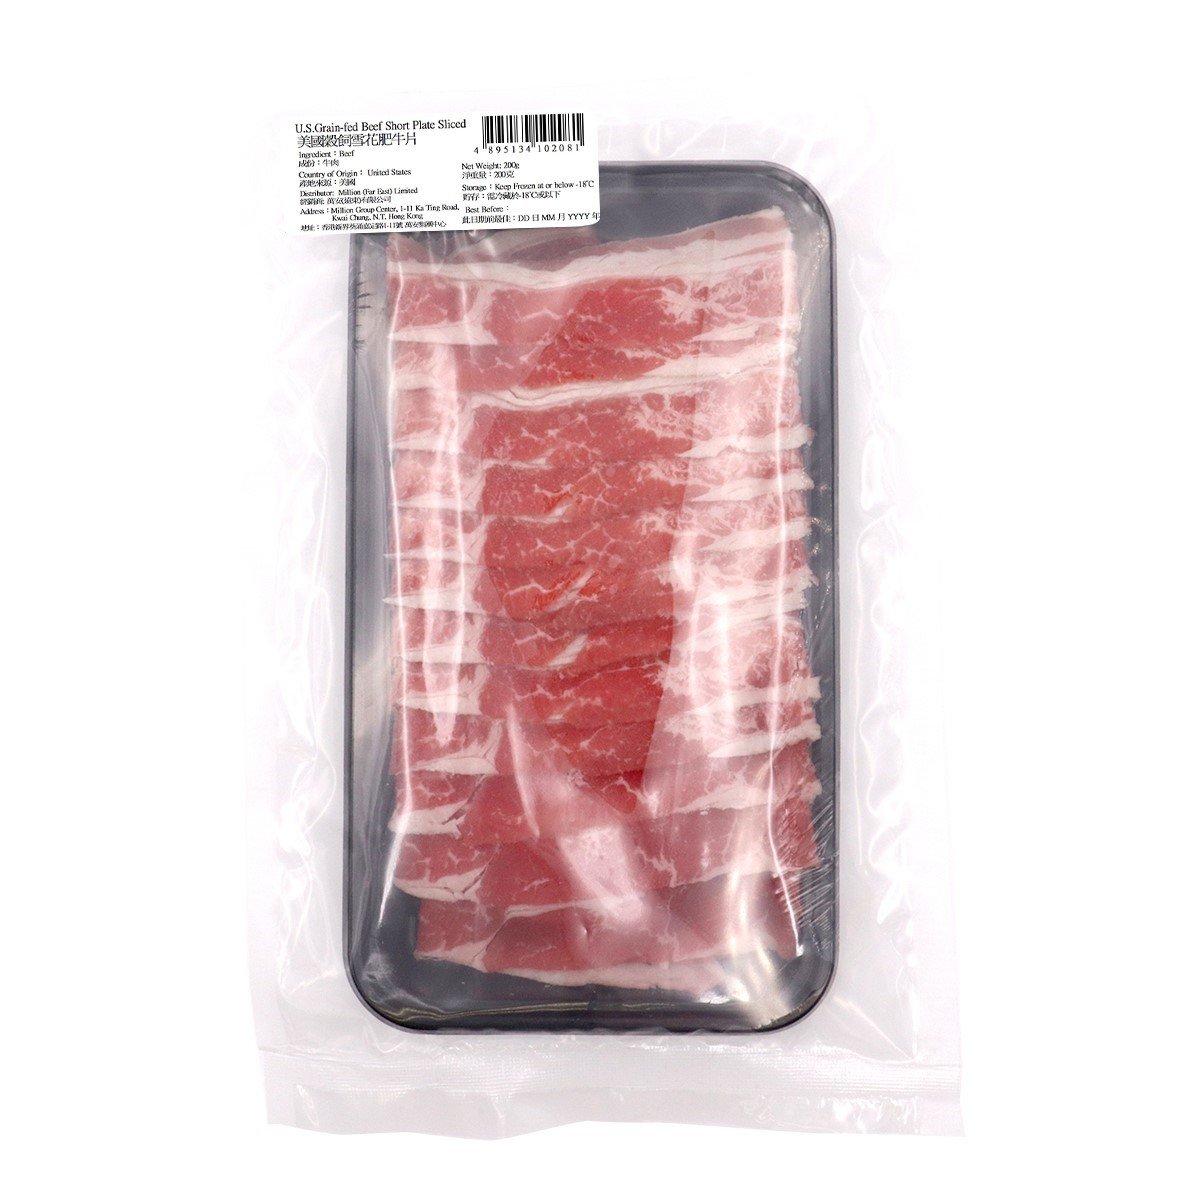 U.S. Grain-fed Beef Short Plate Sliced (Frozen)